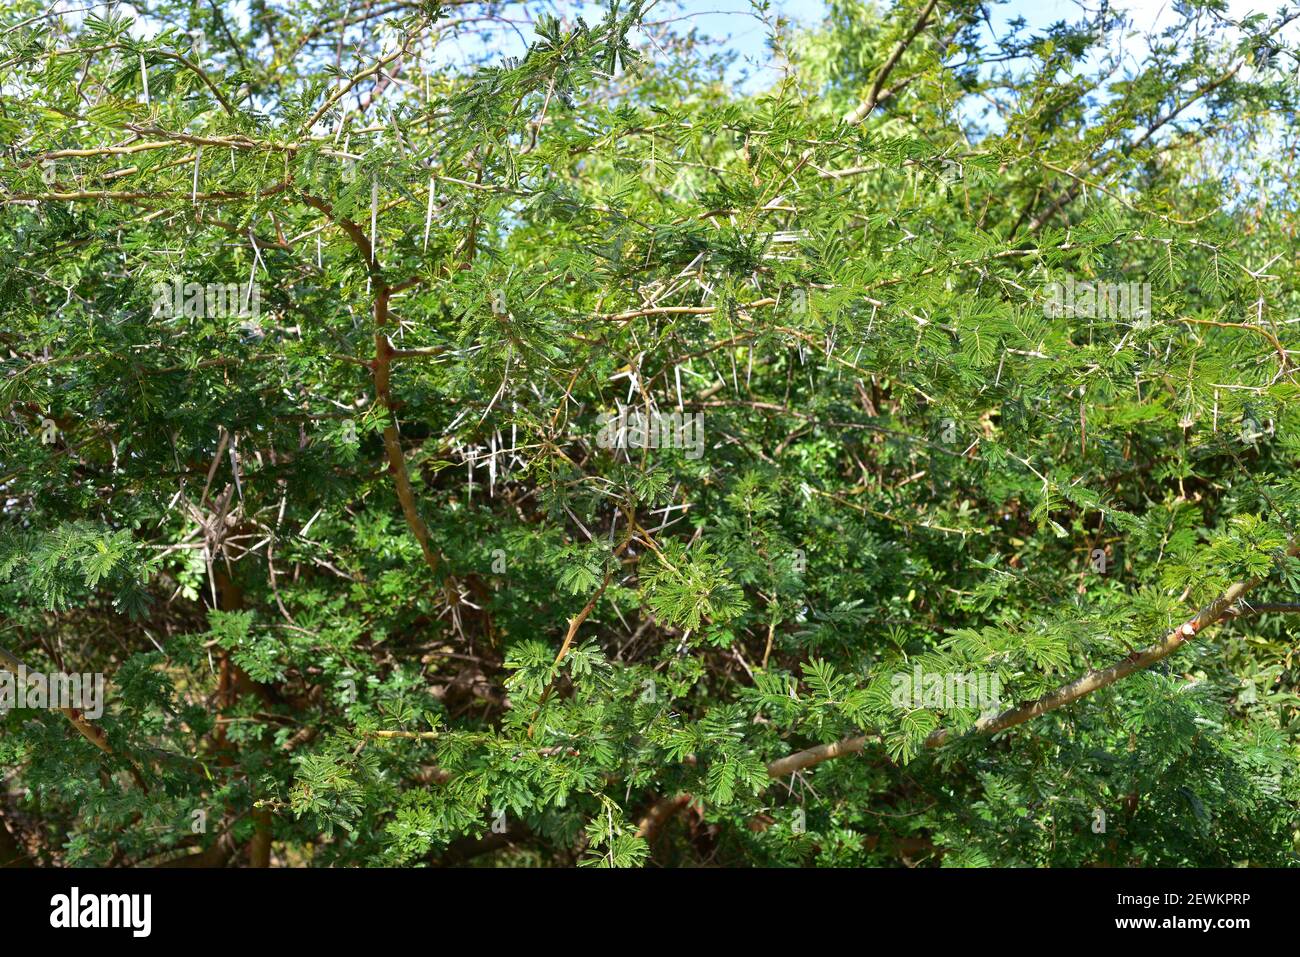 Sweet thorn or karoo thorn (Vachellia karroo, Acacia karroo or Acacia natalitia) is a spiny shrub or small tree native to southern Africa. Stock Photo